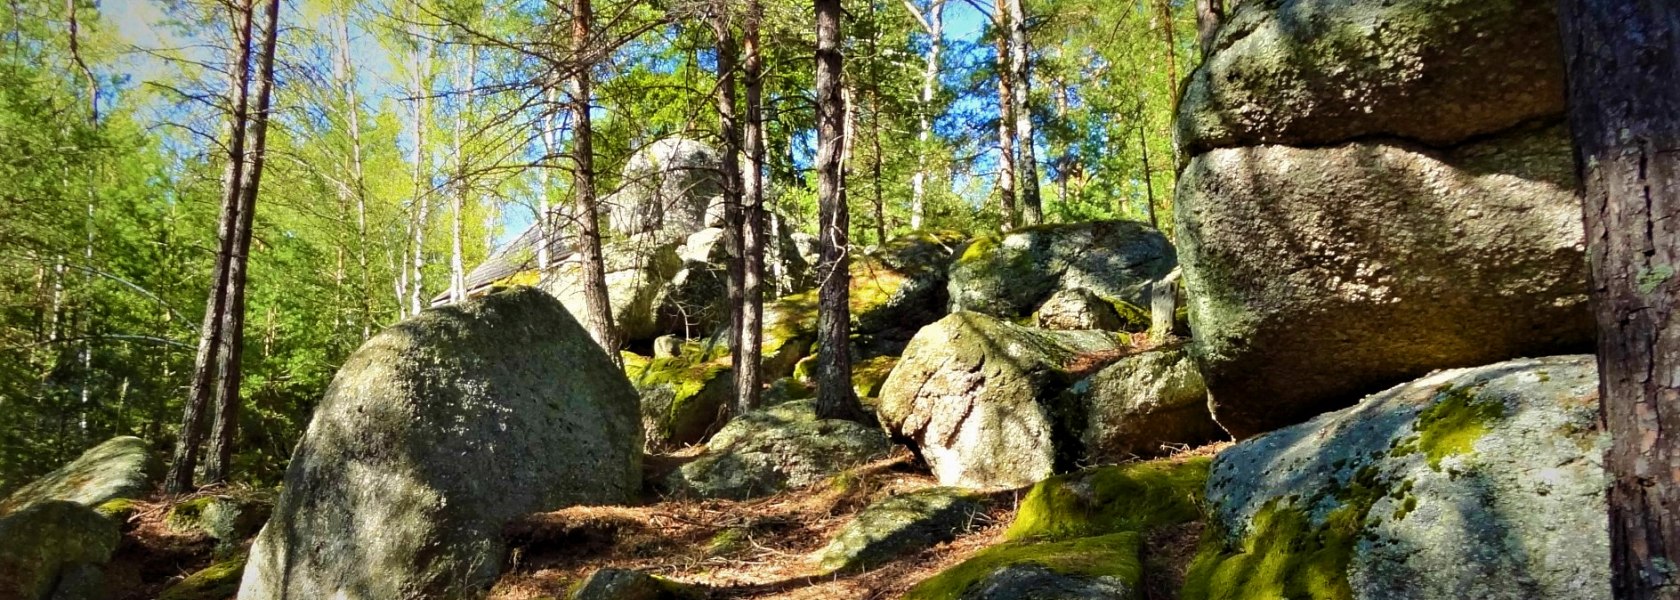 Bizarre Felsformationen im Naturpark Nordwald, © Verein Naturpark Nordwald